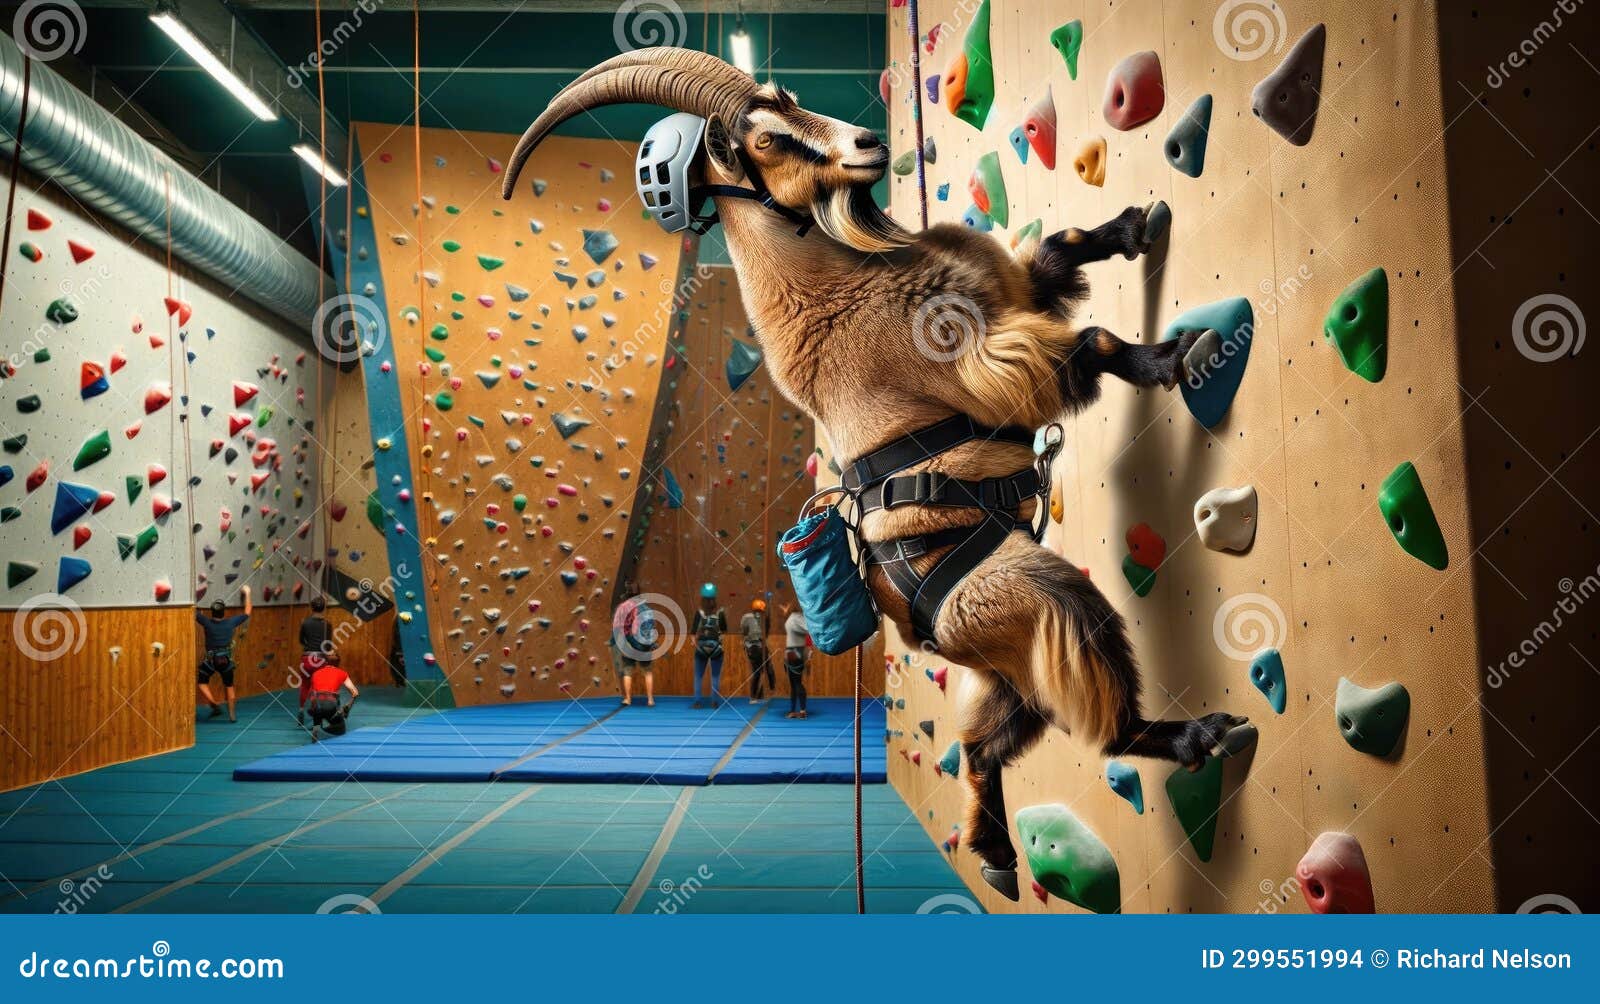 Mountain Goat Climbing Indoor Rock Wall Stock Illustration - Illustration  of bouldering, sport: 299551994